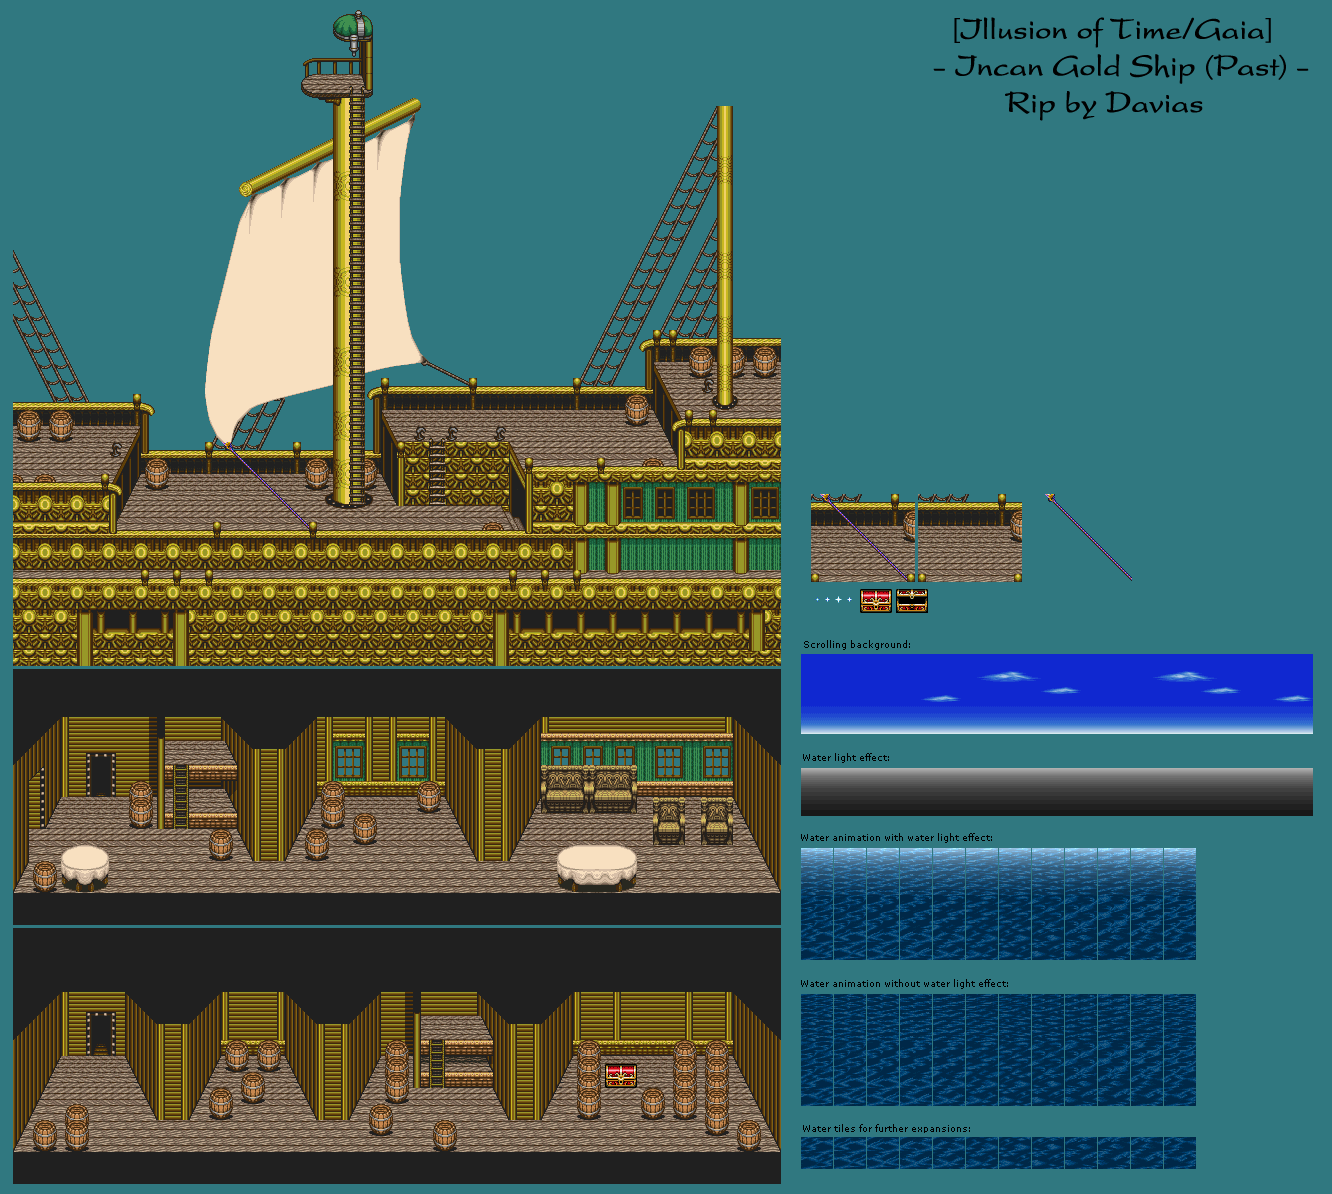 Incan Gold Ship (Past)